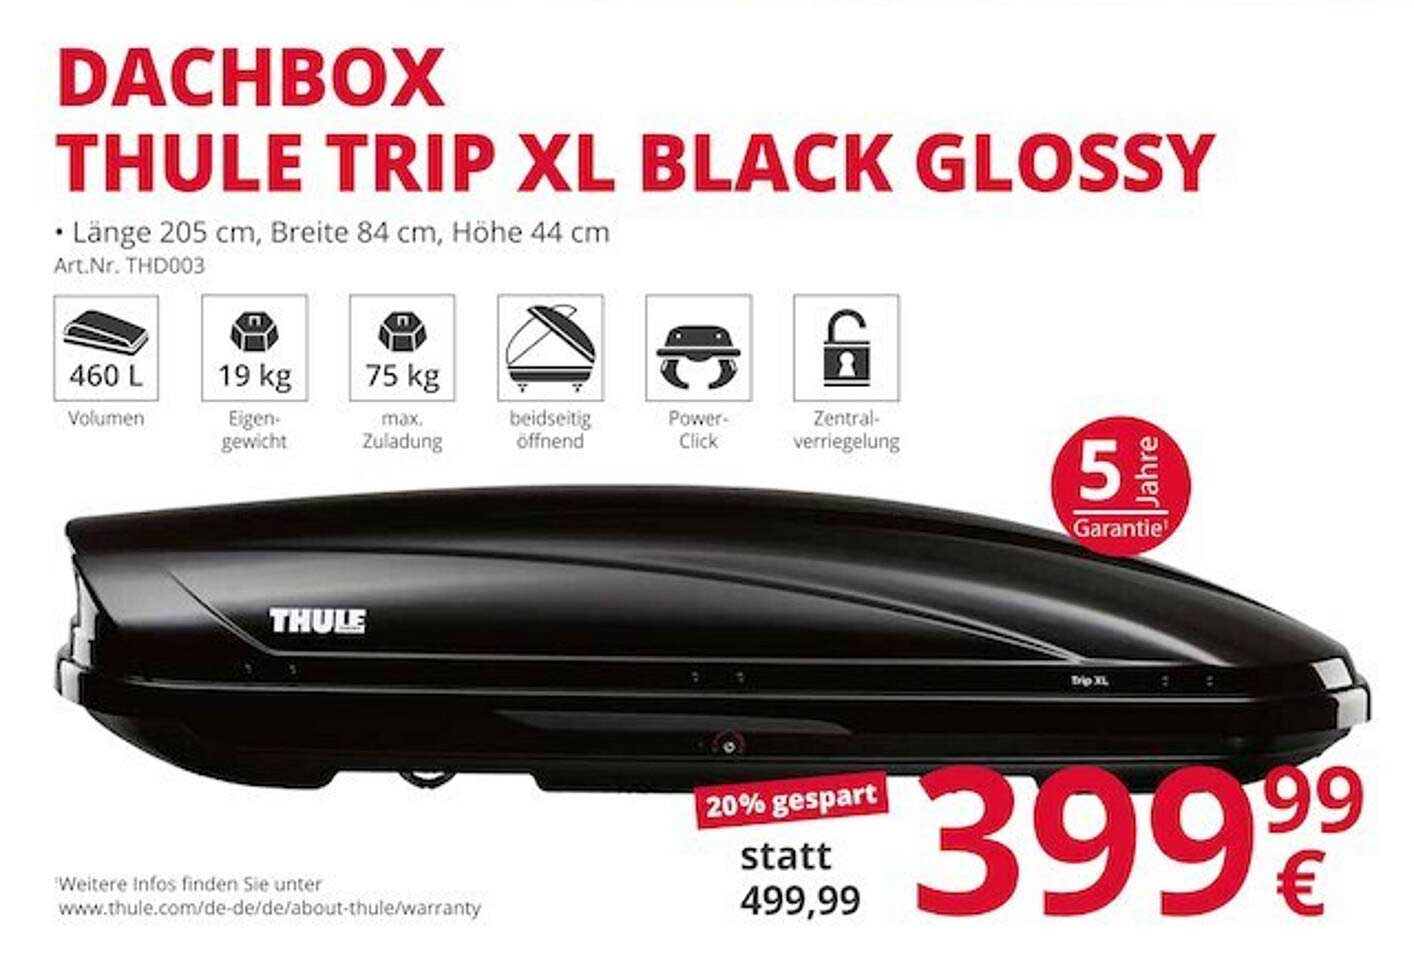 ATU Dachbox Thule Trip XL Black Glossy